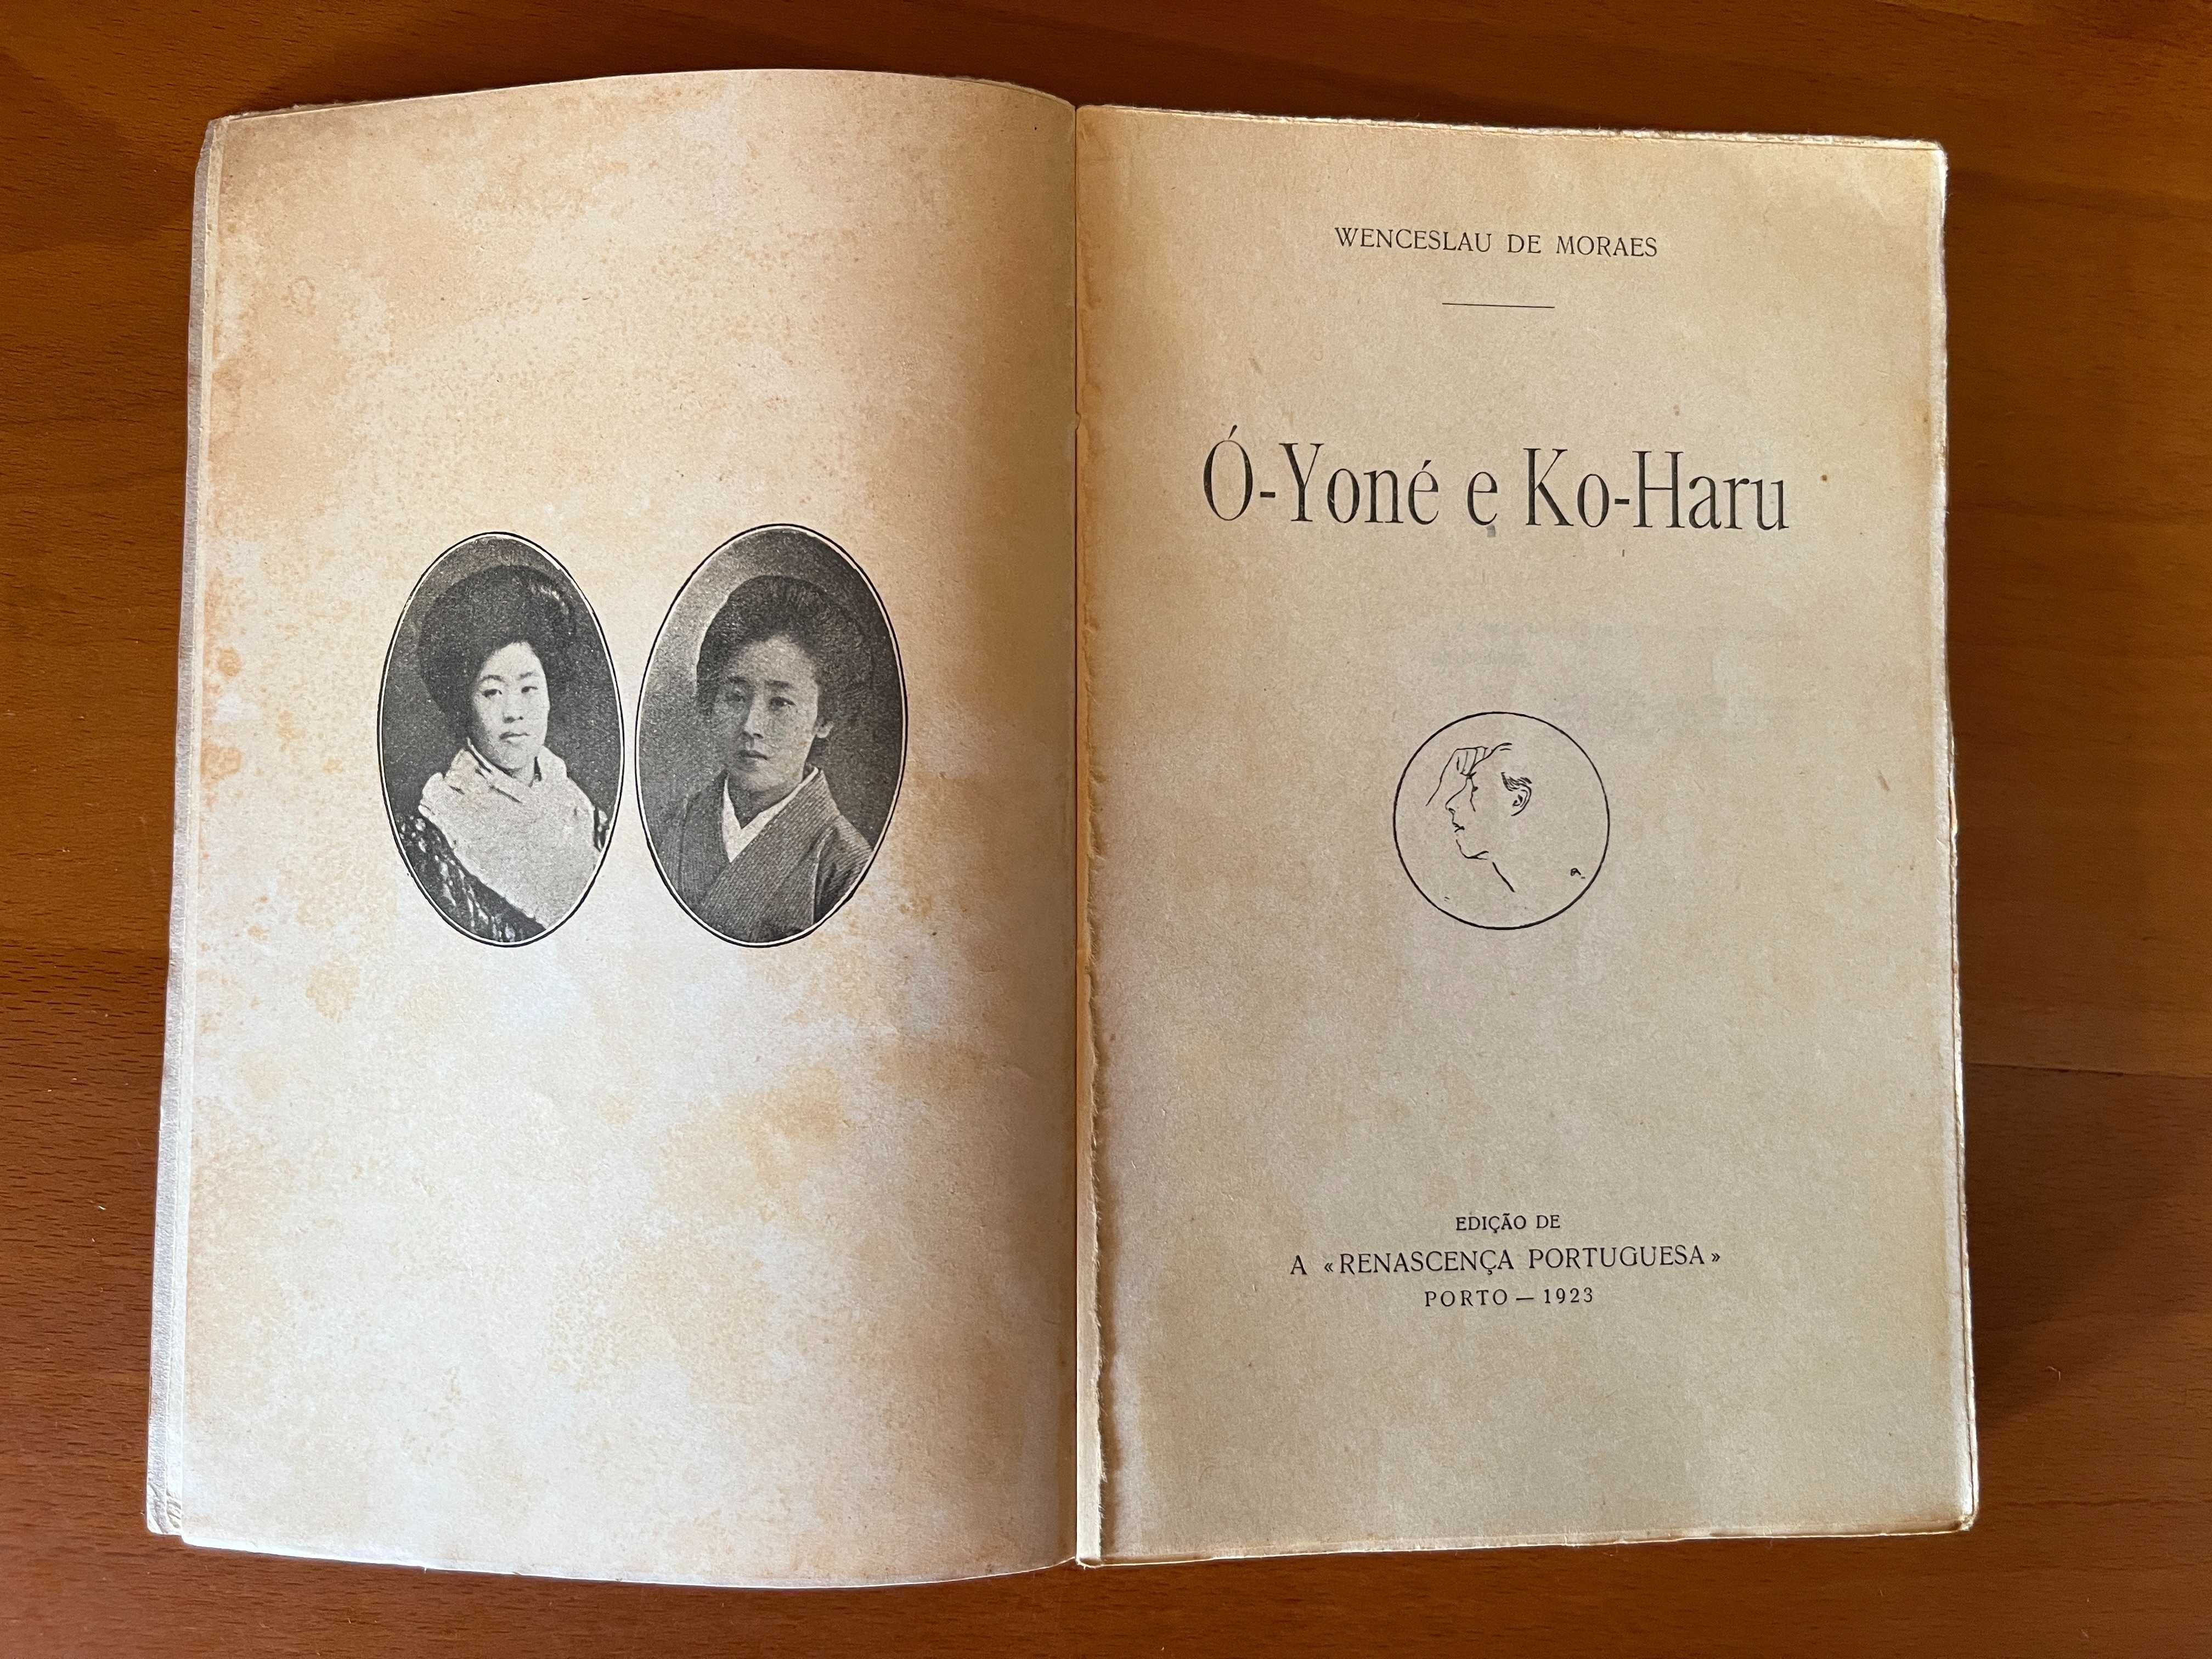 Ó-Yoné e Ko-Haru – Wenceslau de Moraes (1923)